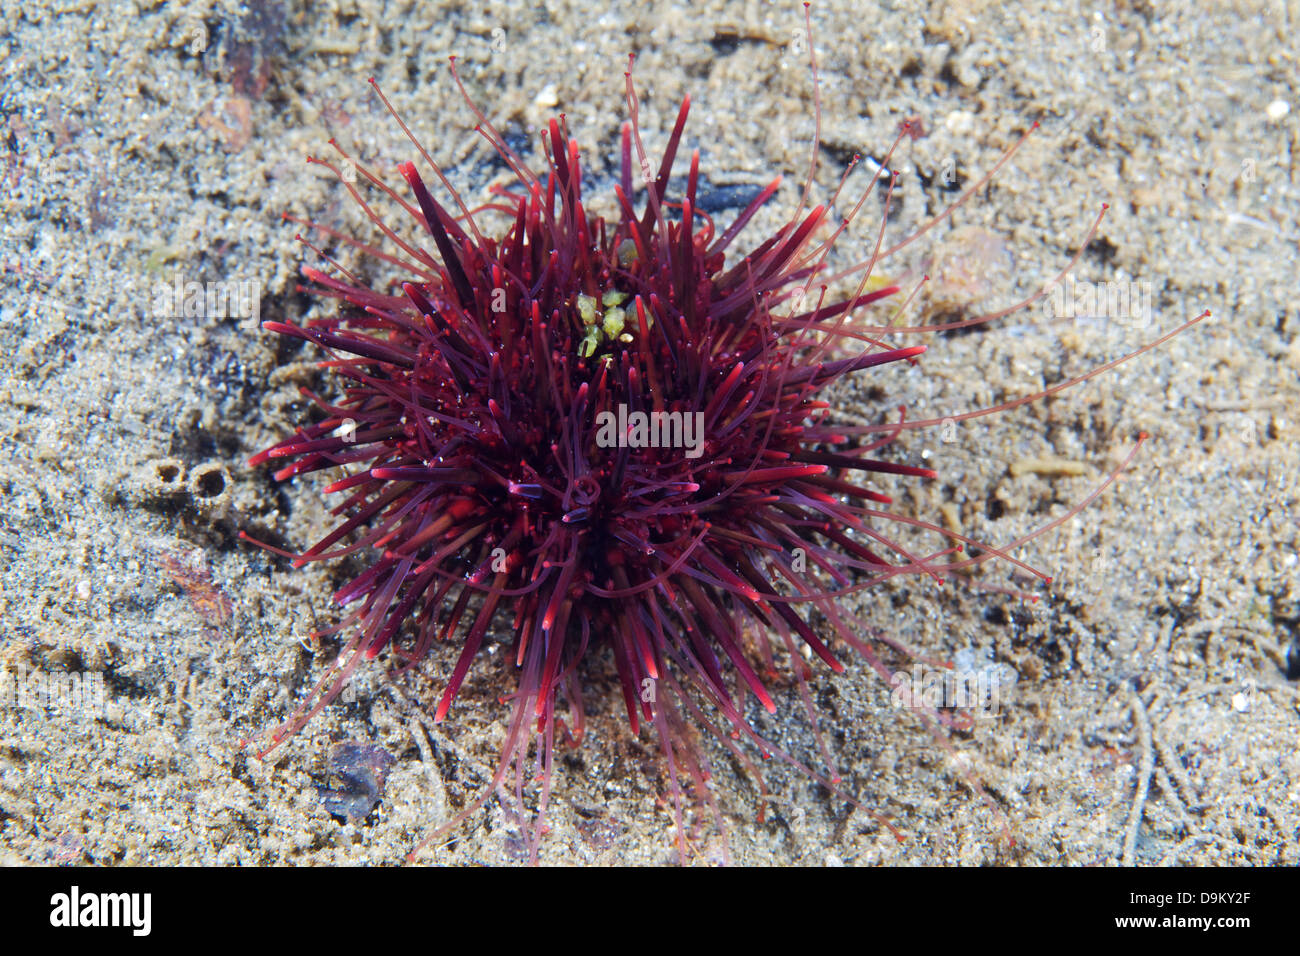 Strongylocentrotus nudus sea urchin young, Sea of Japan Stock Photo